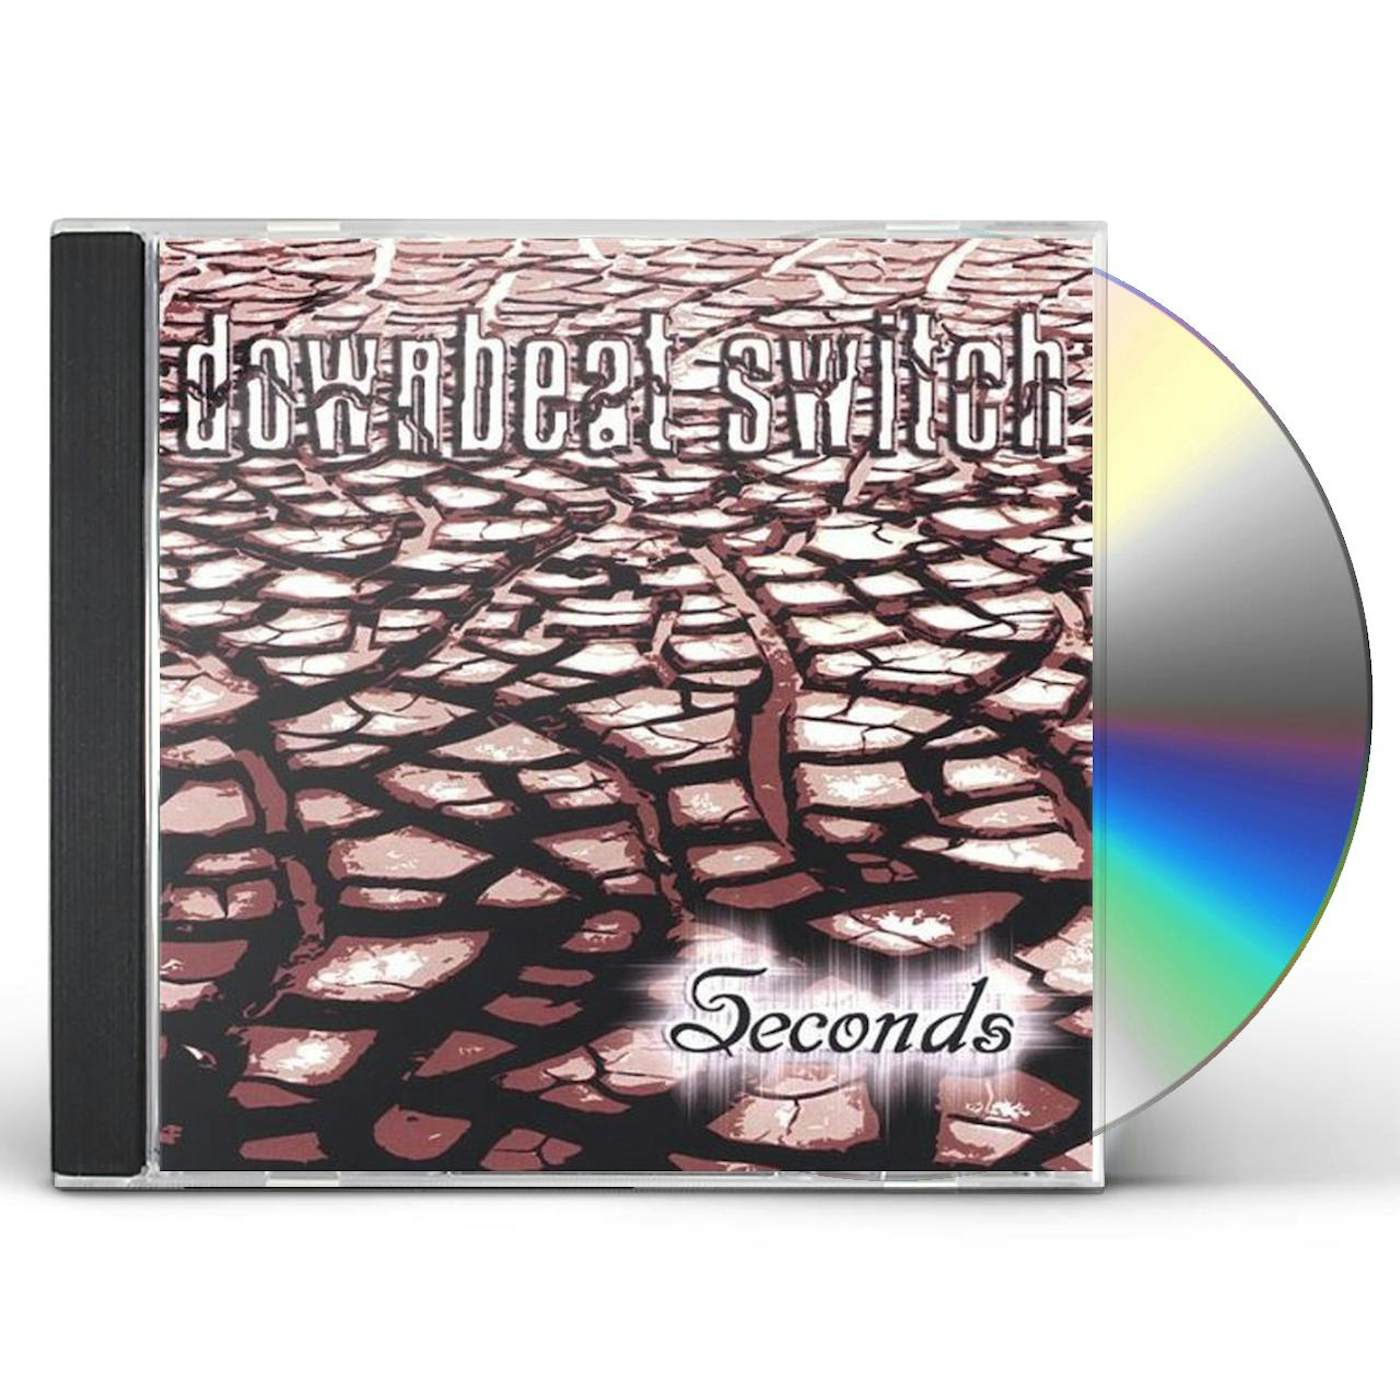 Downbeat Switch SECONDS CD